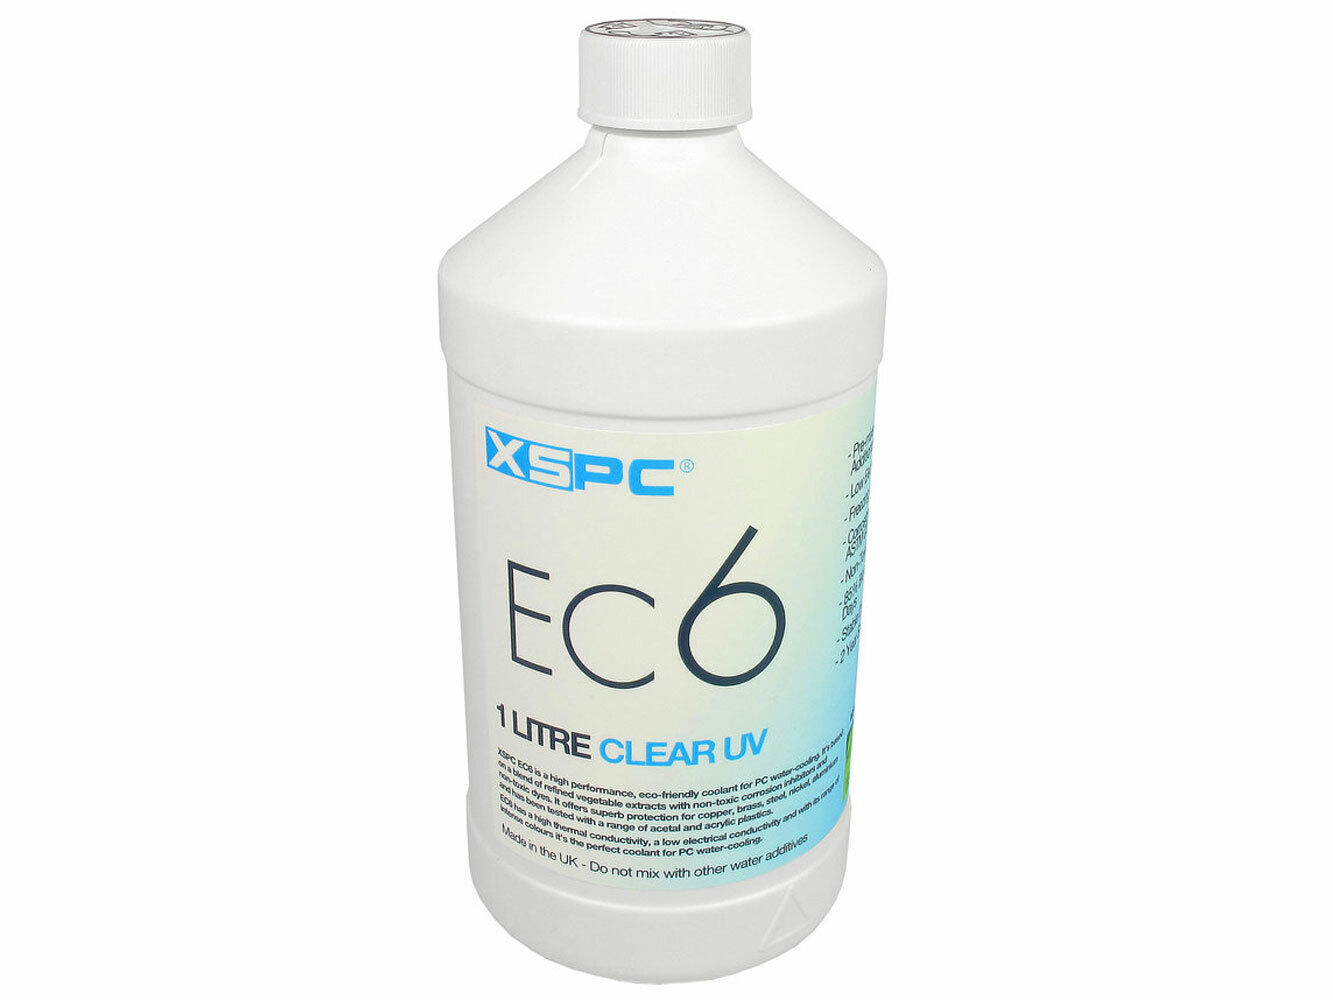 XSPC EC6 High Performance Premix PC Coolant, Translucent, 1000 mL, Clear UV